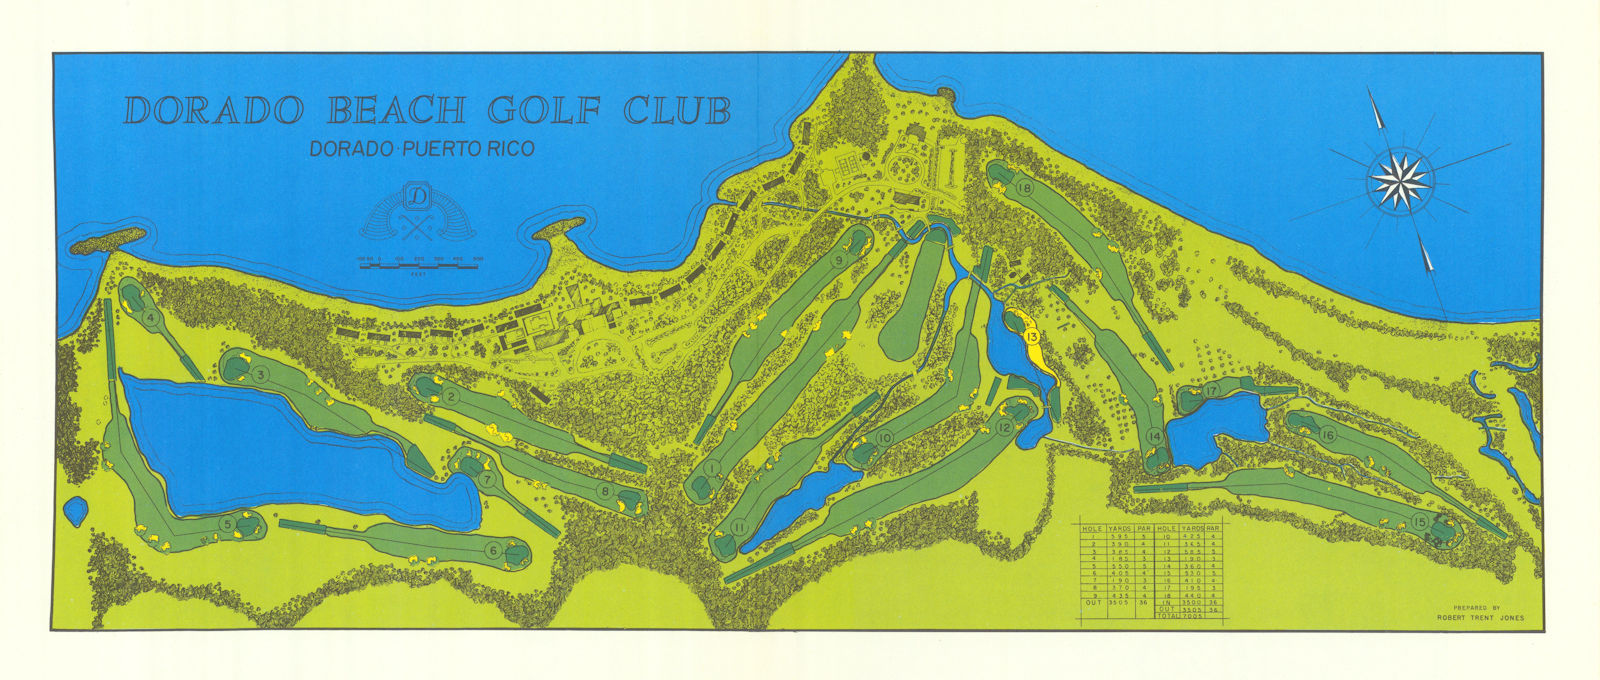 Dorado Beach Golf Club, Dorado, Puerto Rico. Robert Trent Jones plan 1966 map